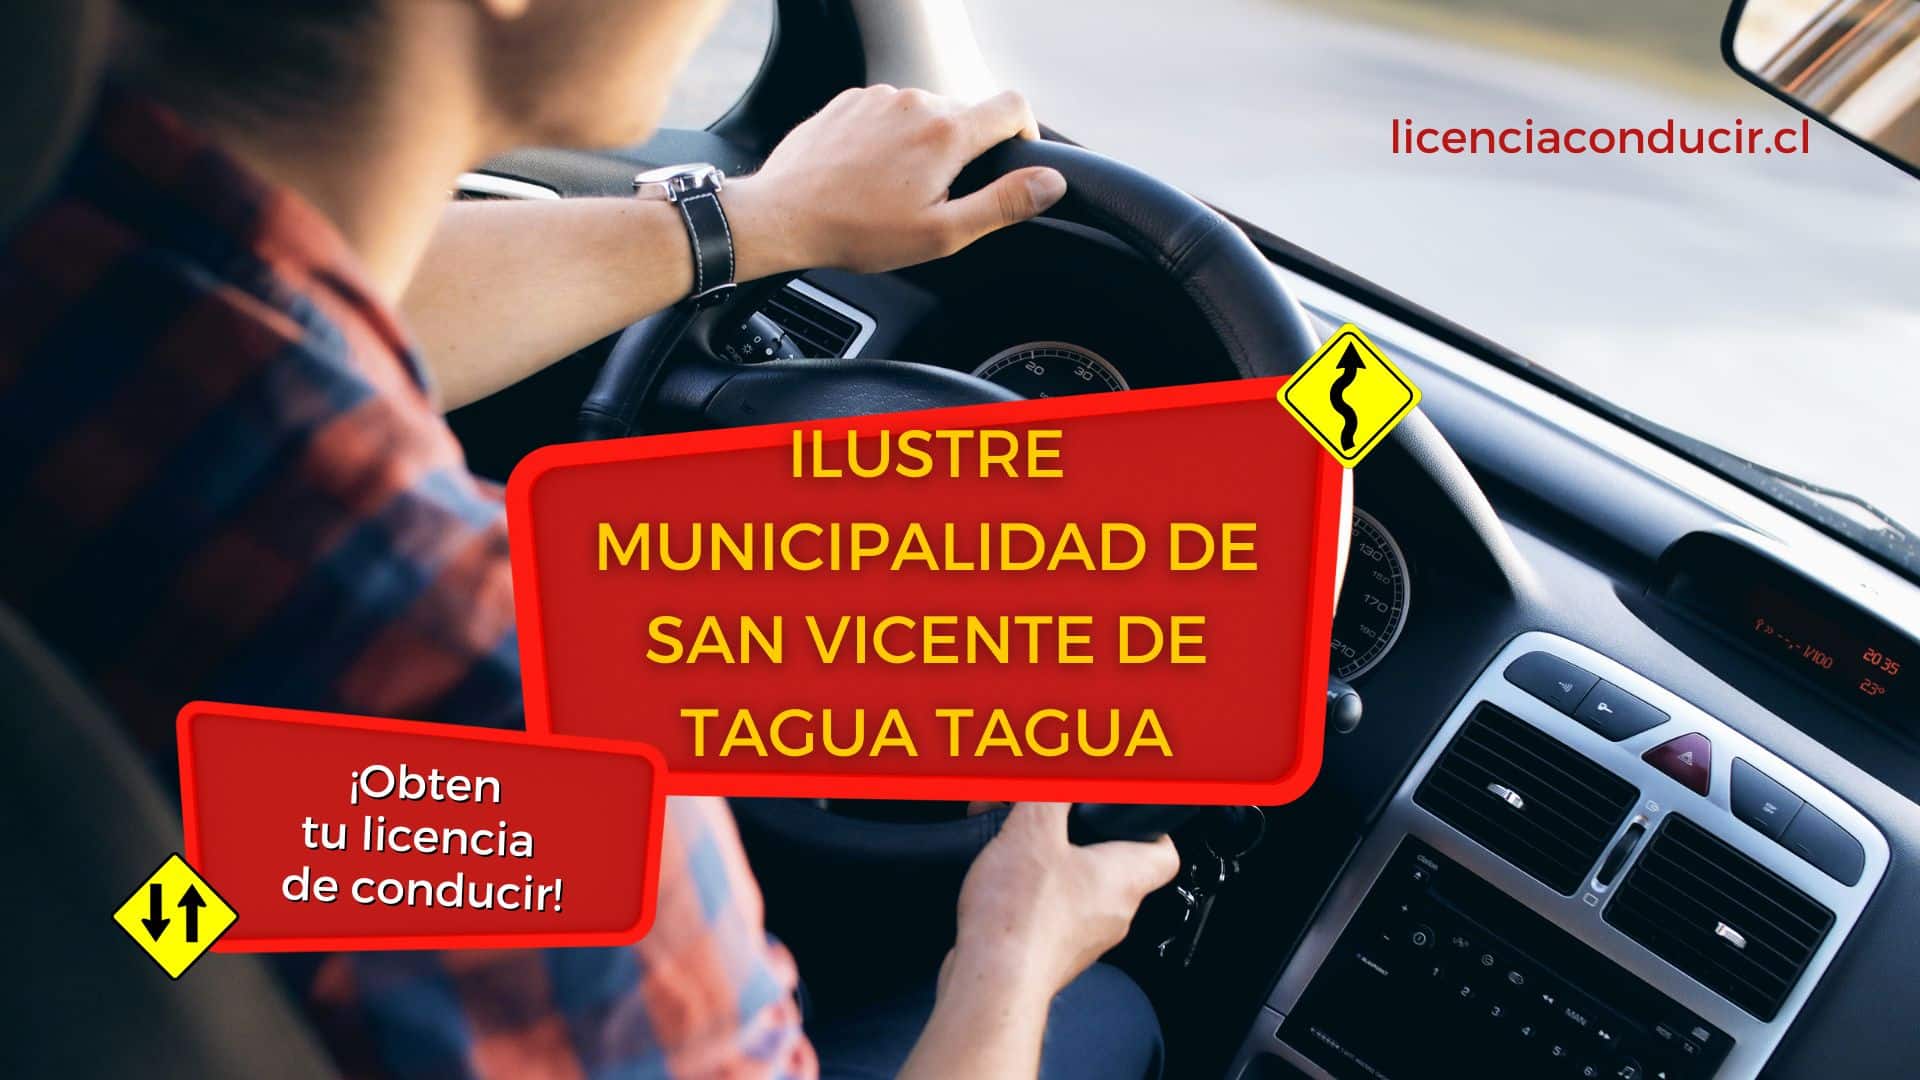 Renovar licencia conducir en san vicente de tagua tagua